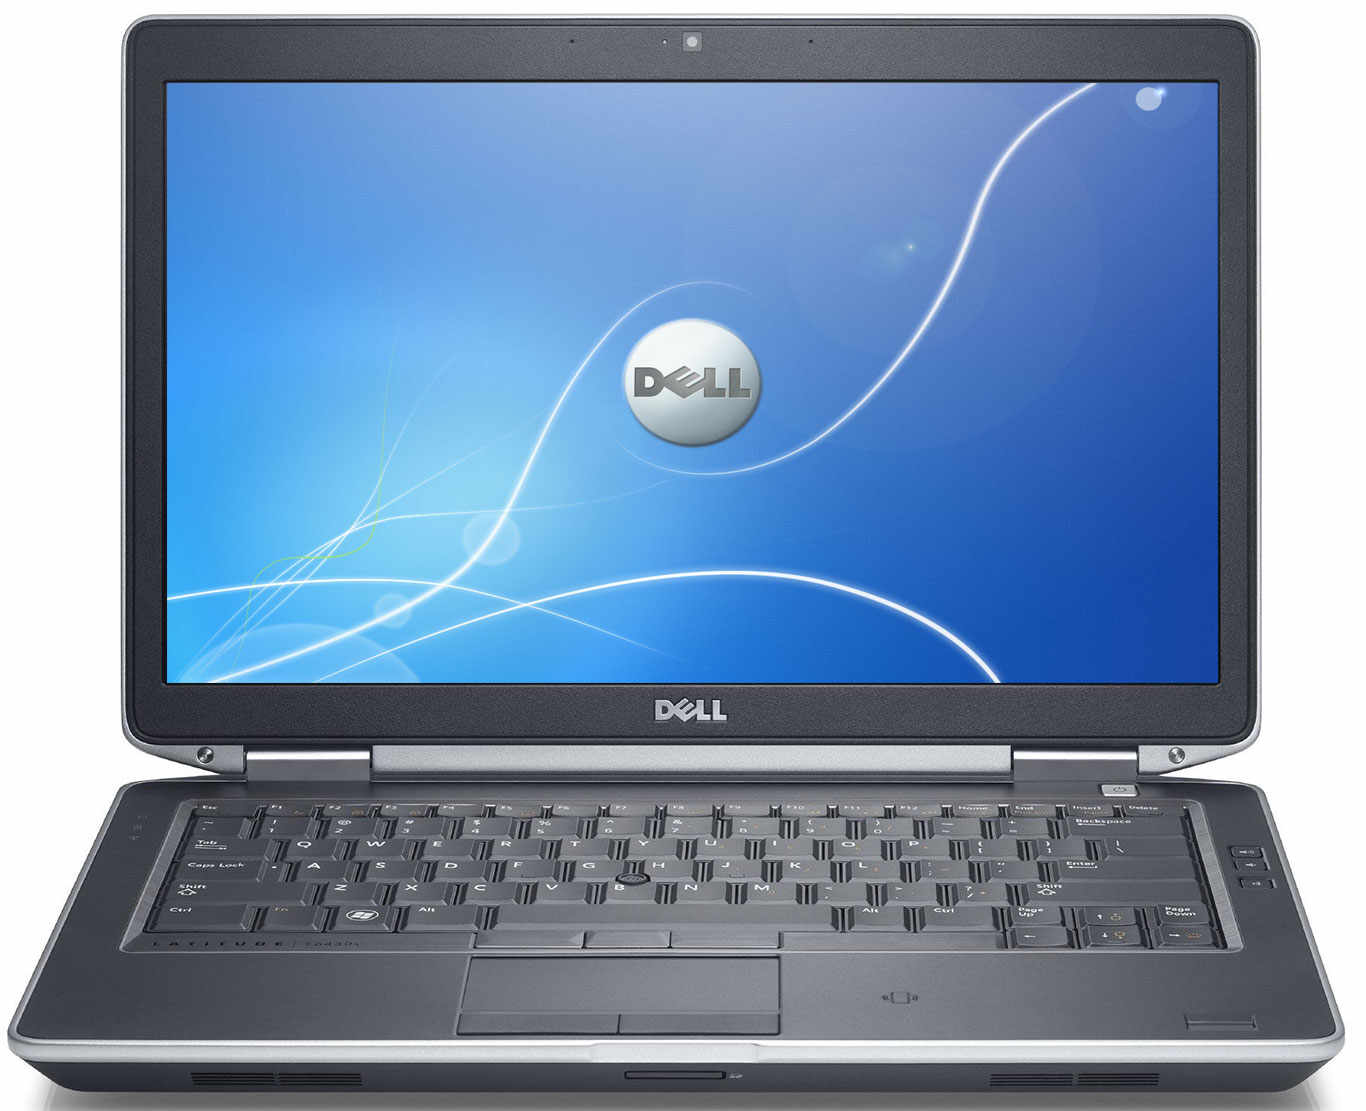 Laptop DELL, LATITUDE E6430, Intel Core i5-3320M, 2.60 GHz, HDD: 320 GB, RAM: 4 GB, unitate optica: DVD-RW, video: Intel HD Graphics 4000